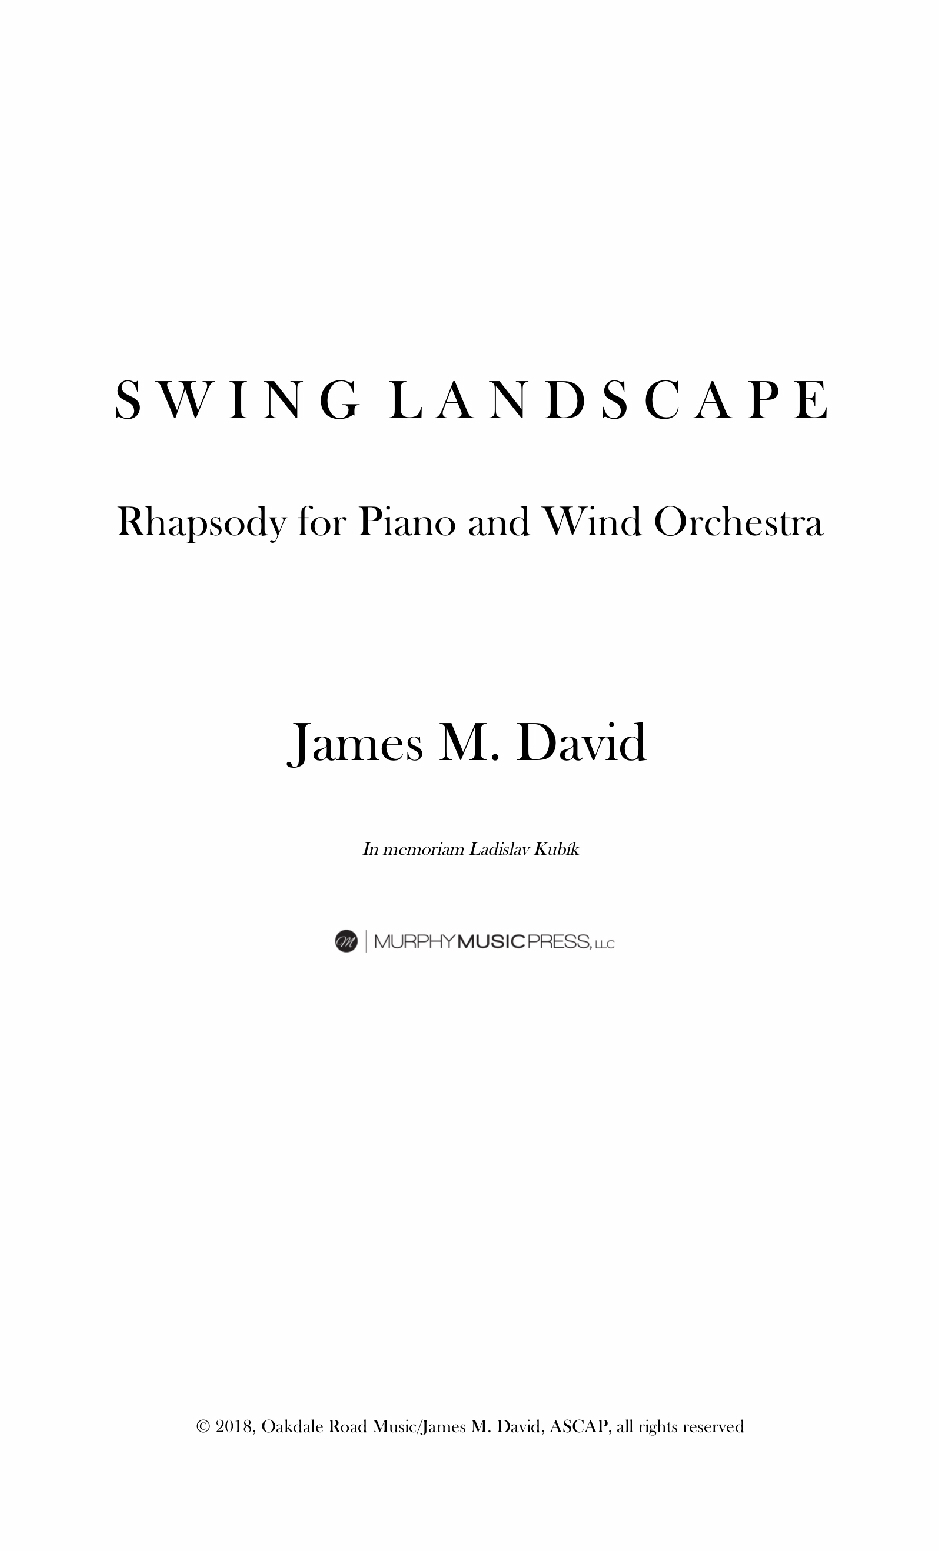 Swing Landscape (Score Only) by James David